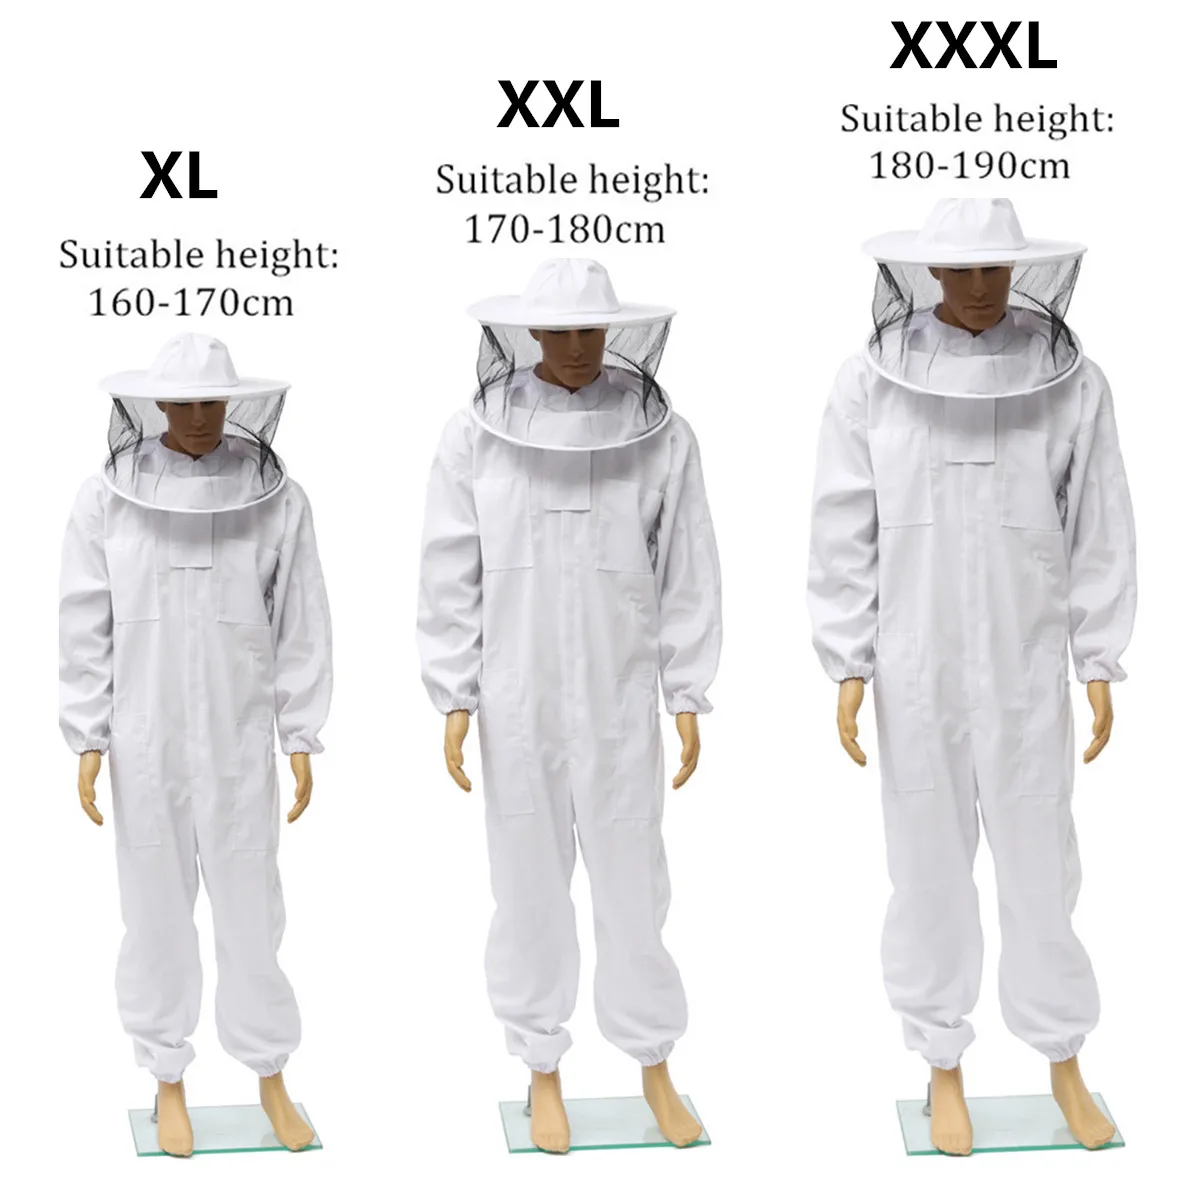 XXL XL L Professional Cotton Full Body Beekeeping Bee Keeping Suit w/ Veil Hood 